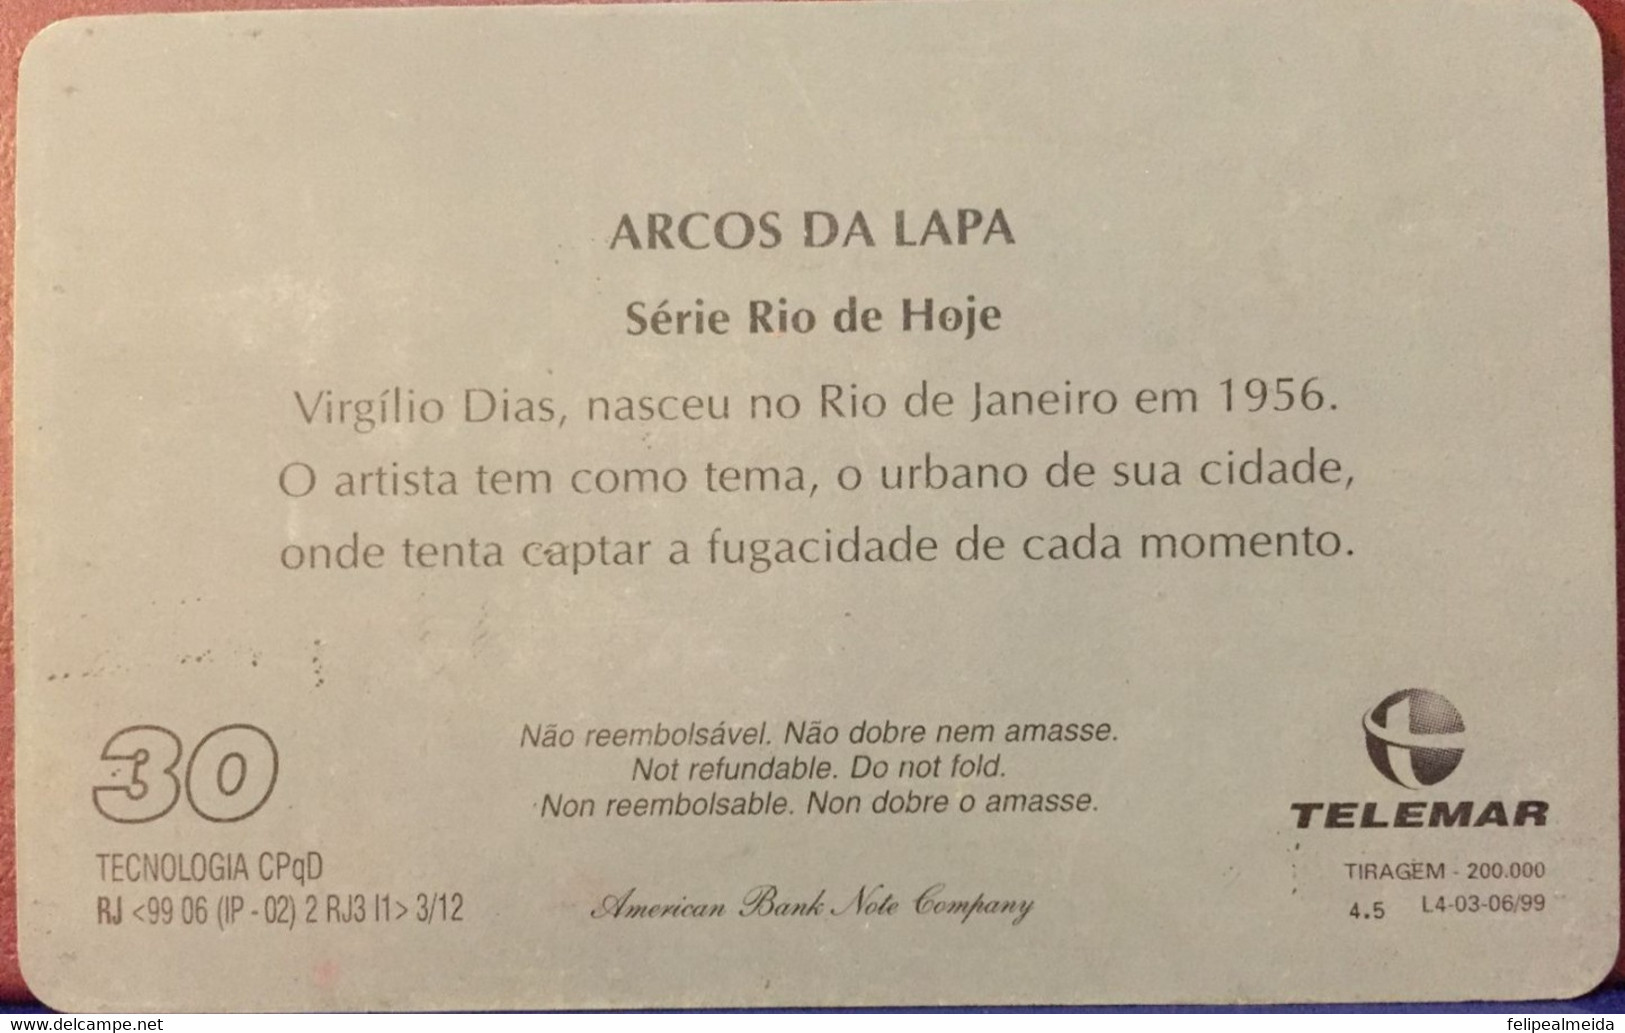 Phone Card Manufactured By Telemar In 1999 - Series Rio Do Hoje - Painter Virgílio Dias - Arcos Da Lapa - Schilderijen